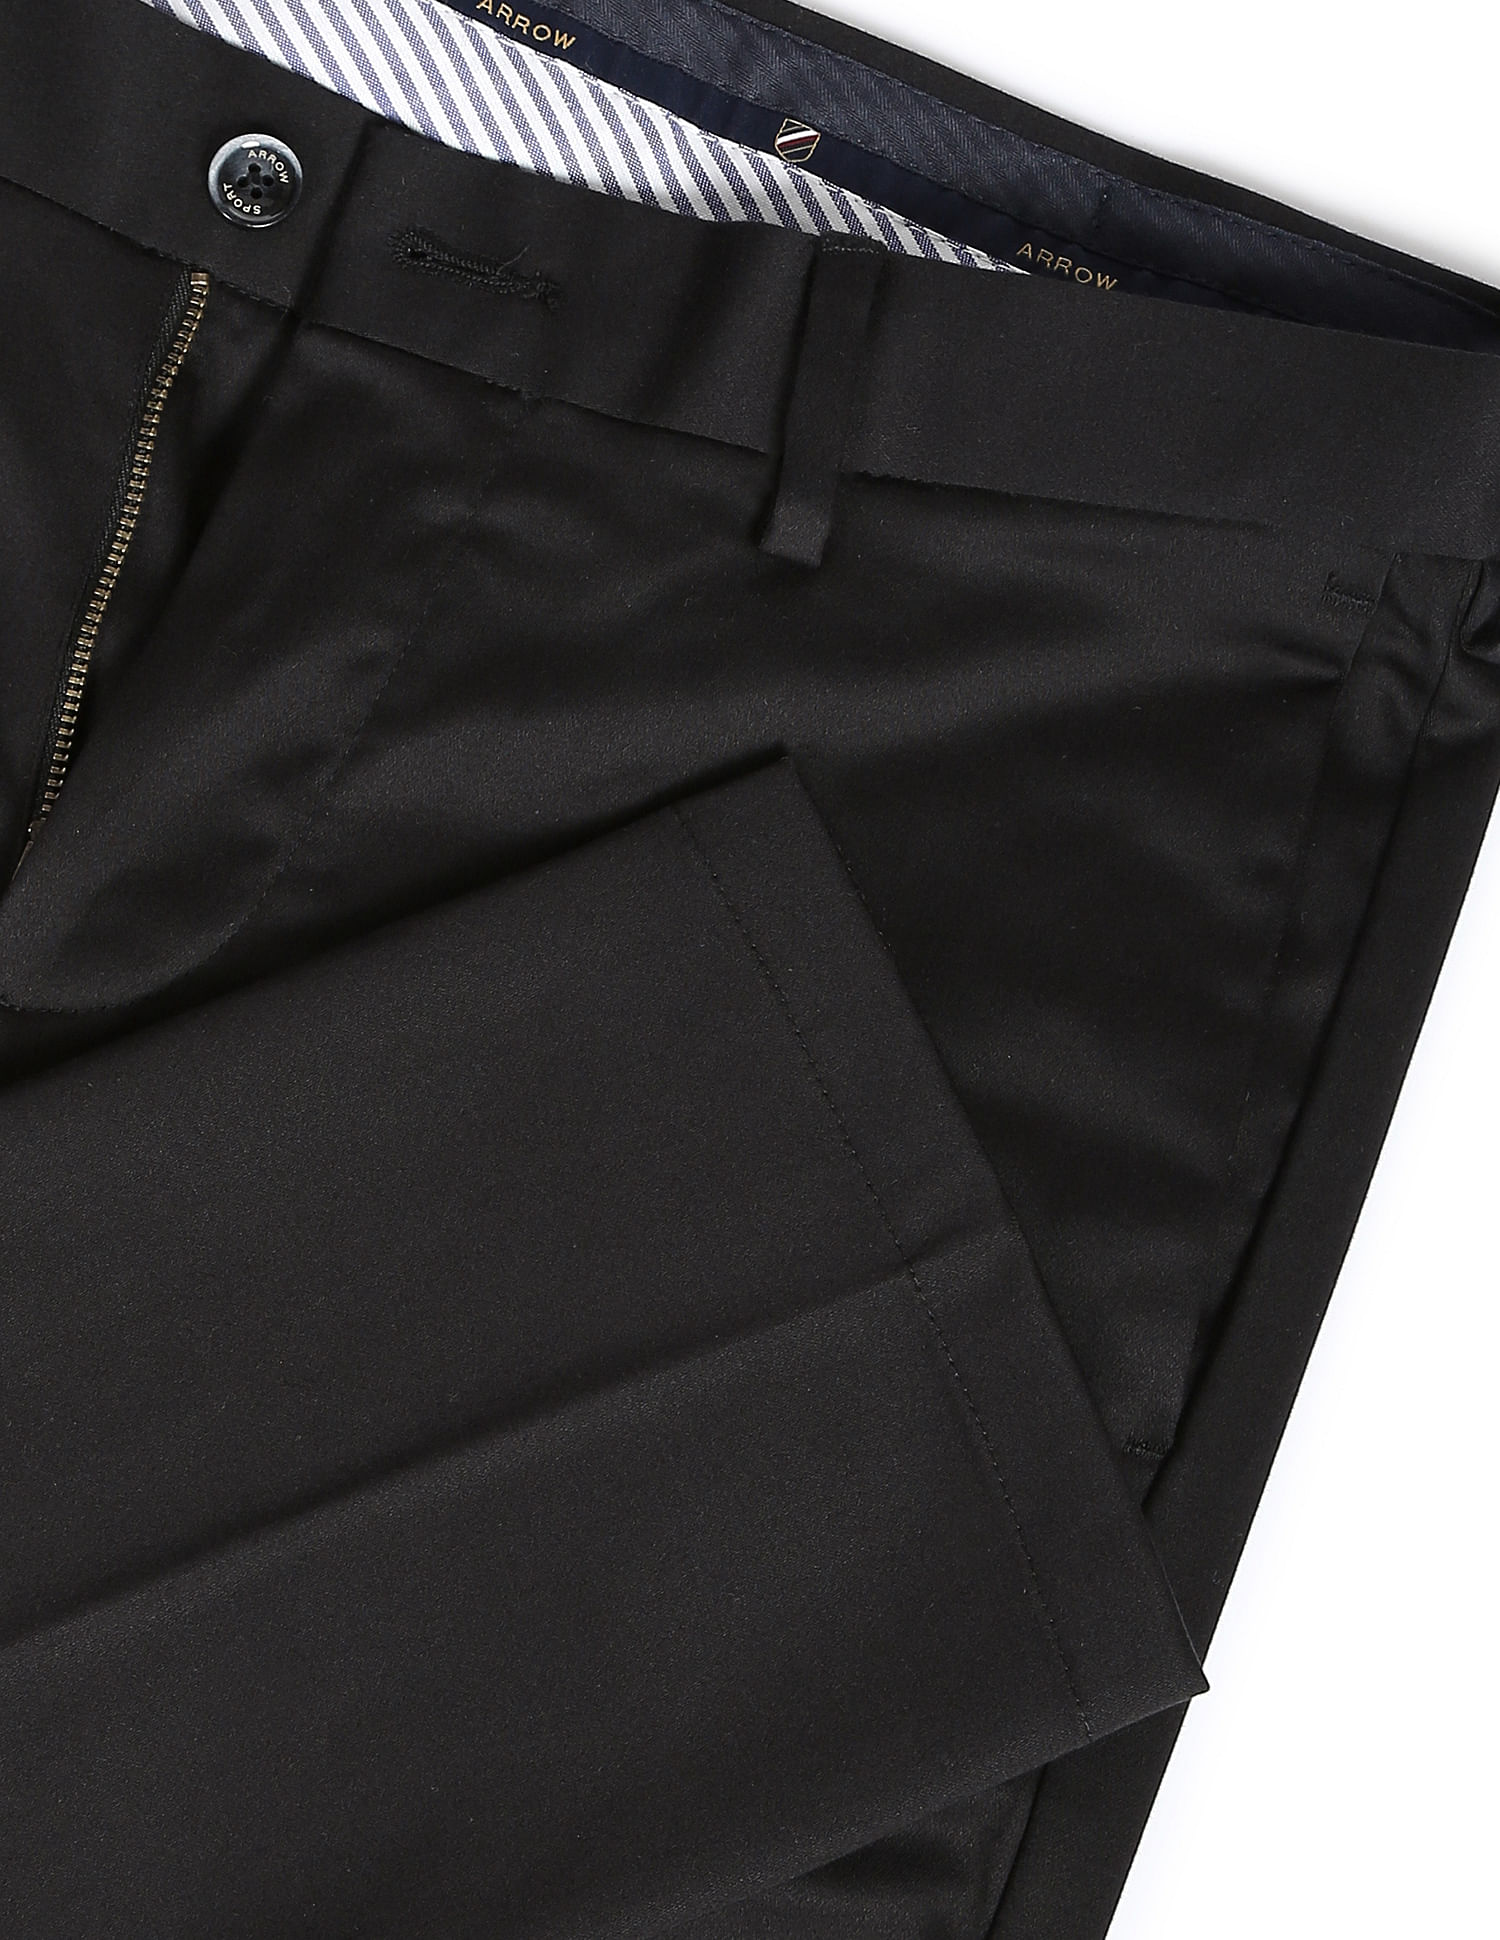 Buy Men Black Solid Super Slim Fit Casual Trousers Online  681637  Peter  England